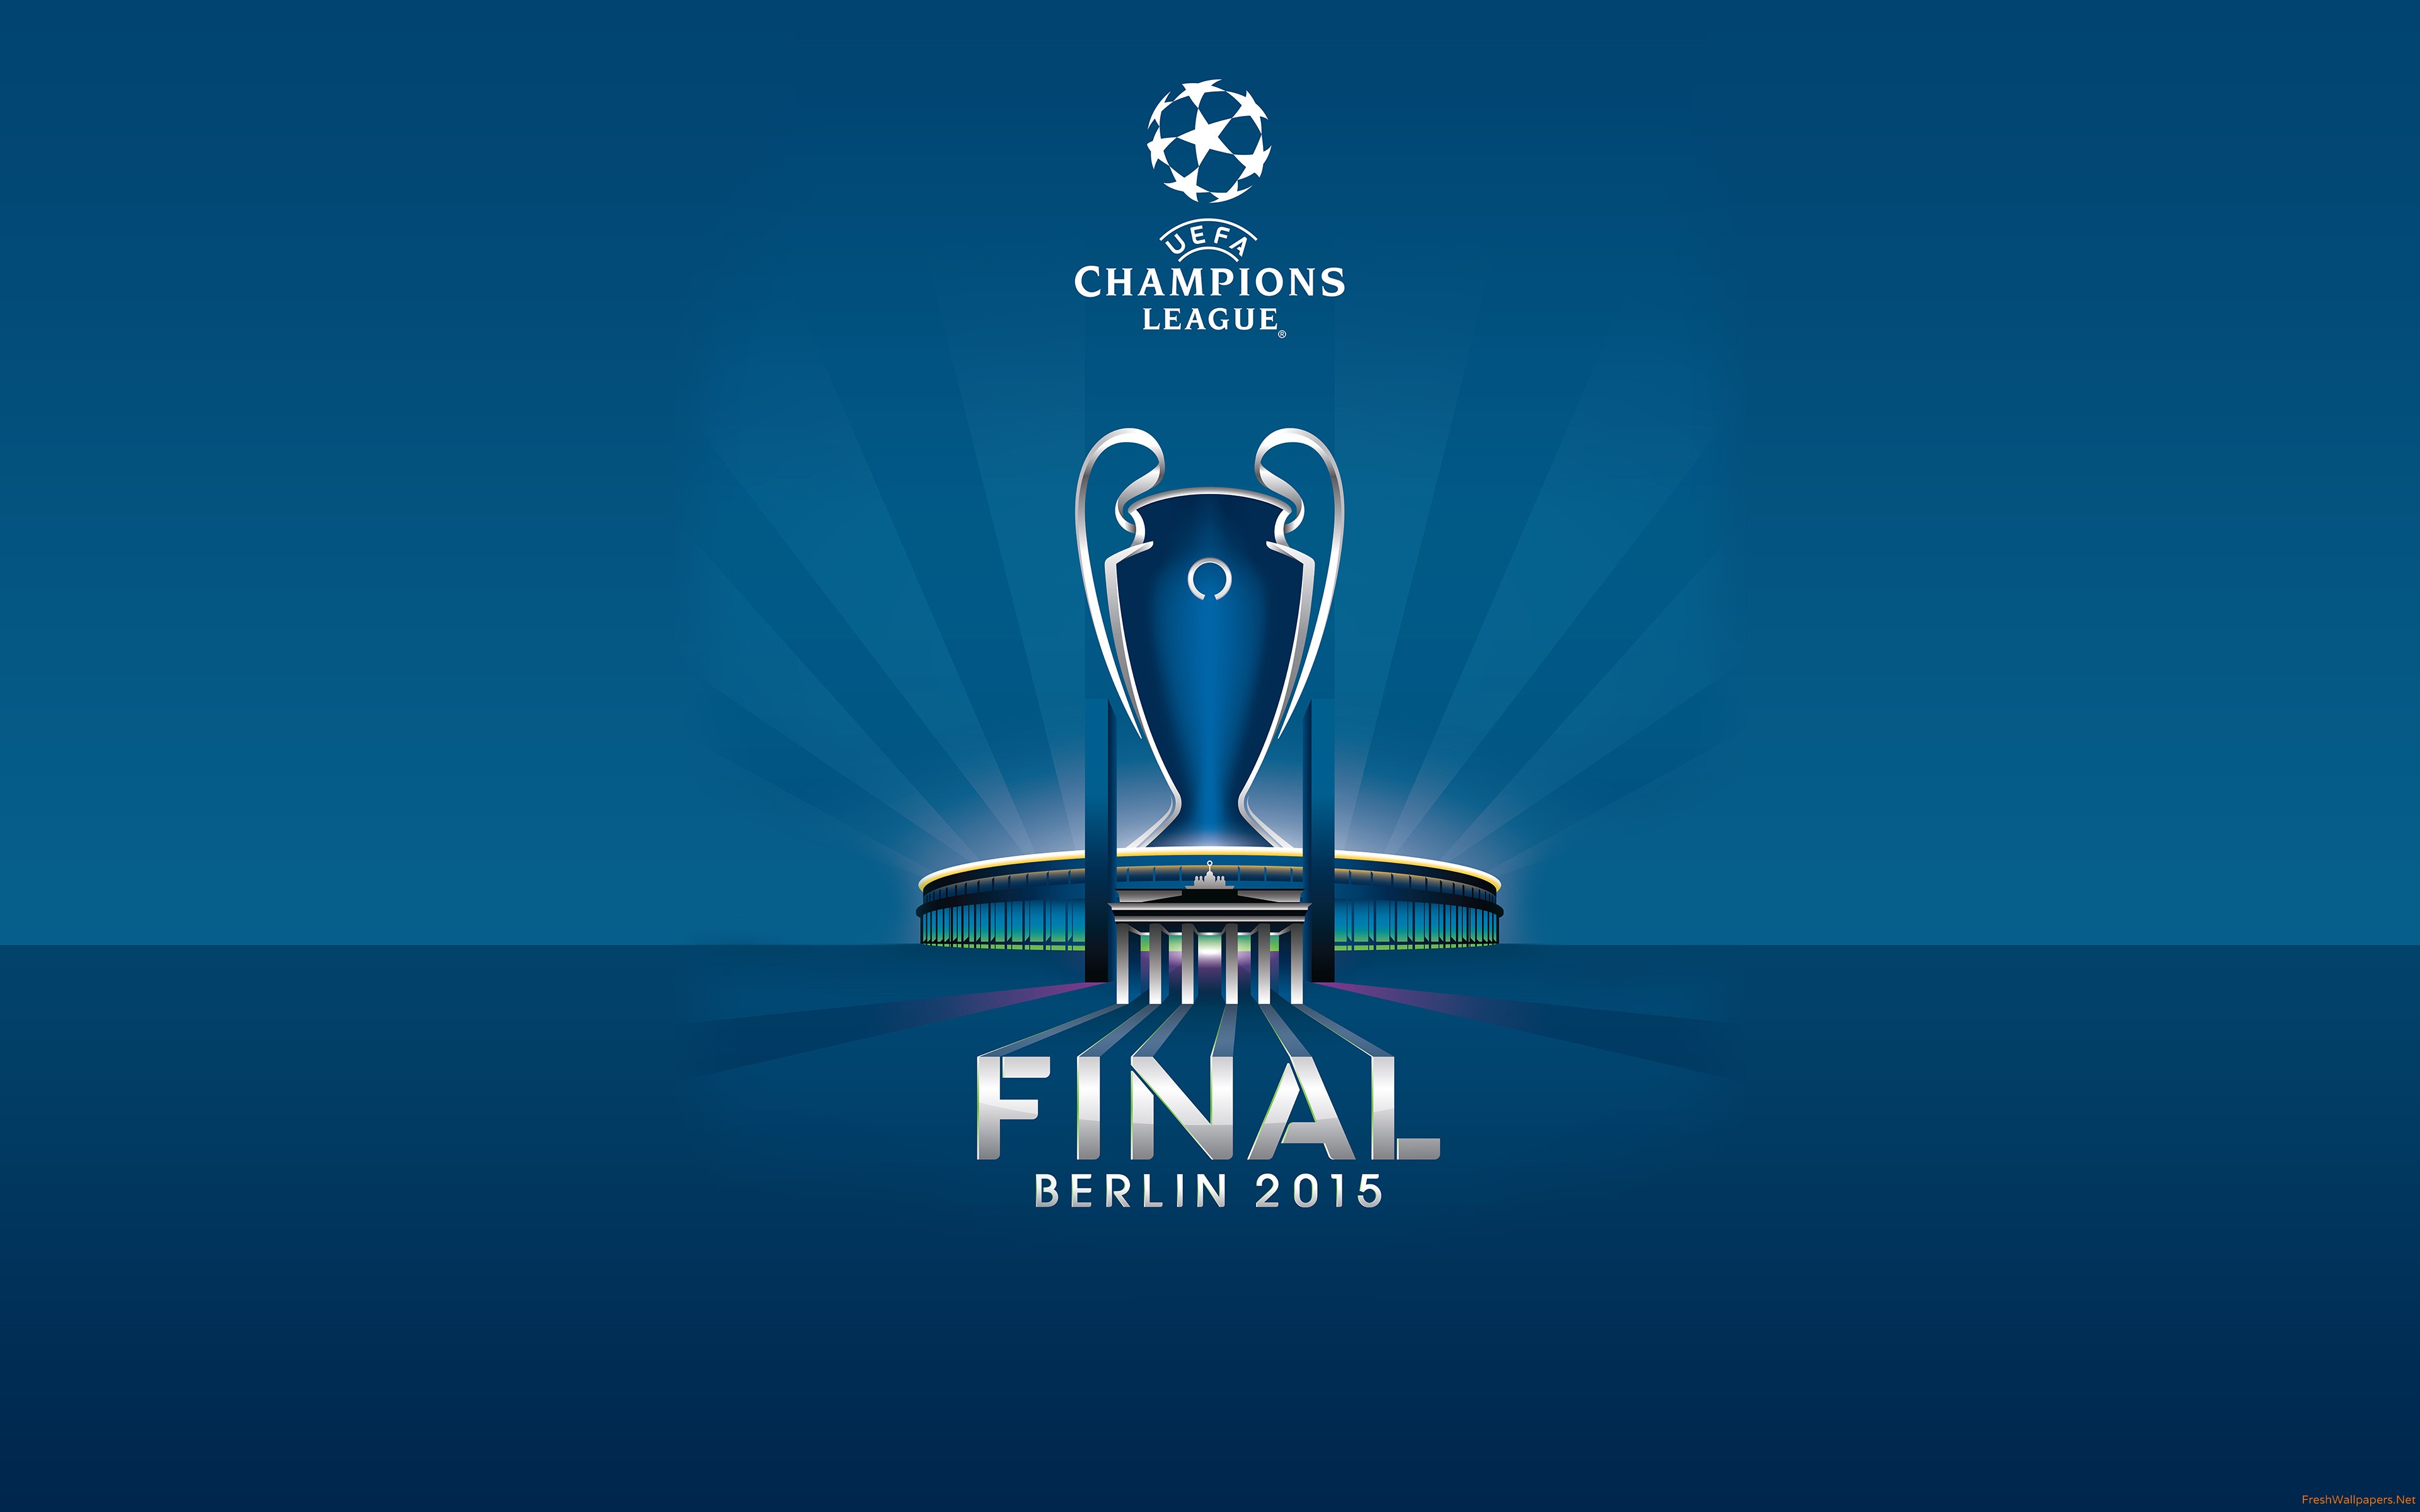 Champions League Final 2018 Poster - 1920x1080 Wallpaper 